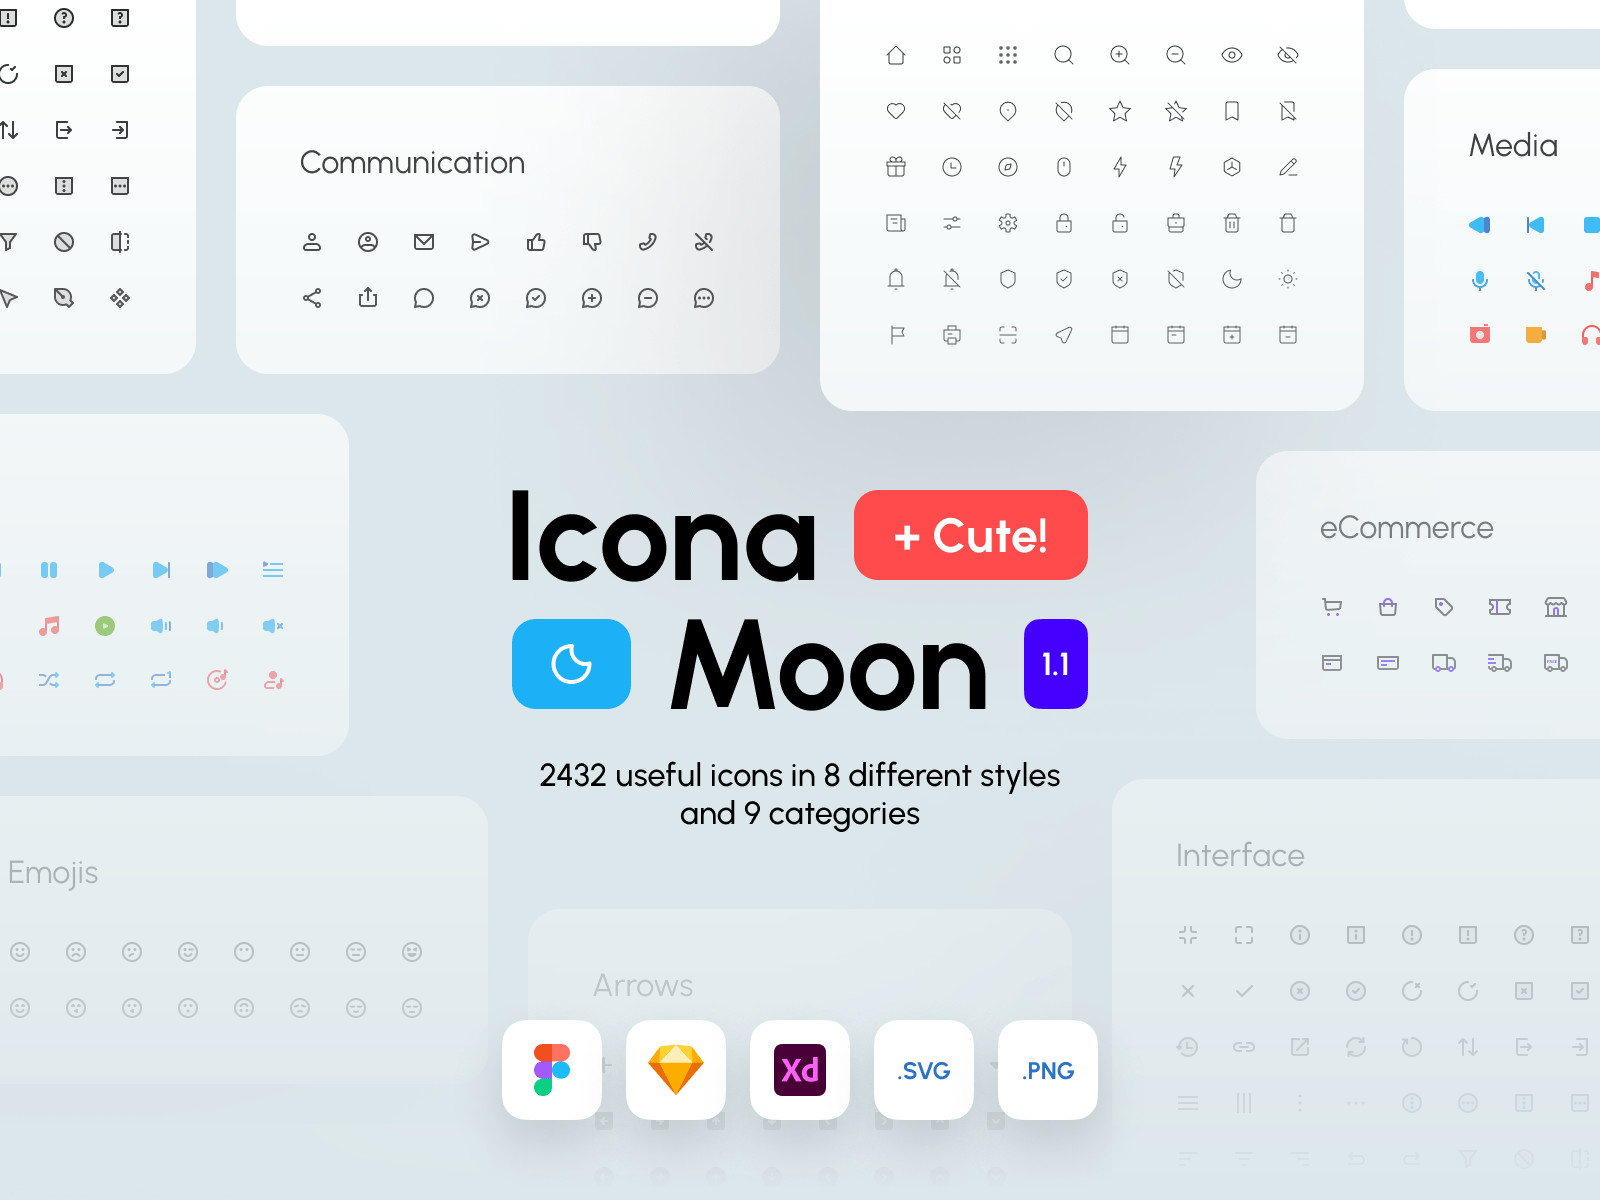 IconaMoon Icons Pack